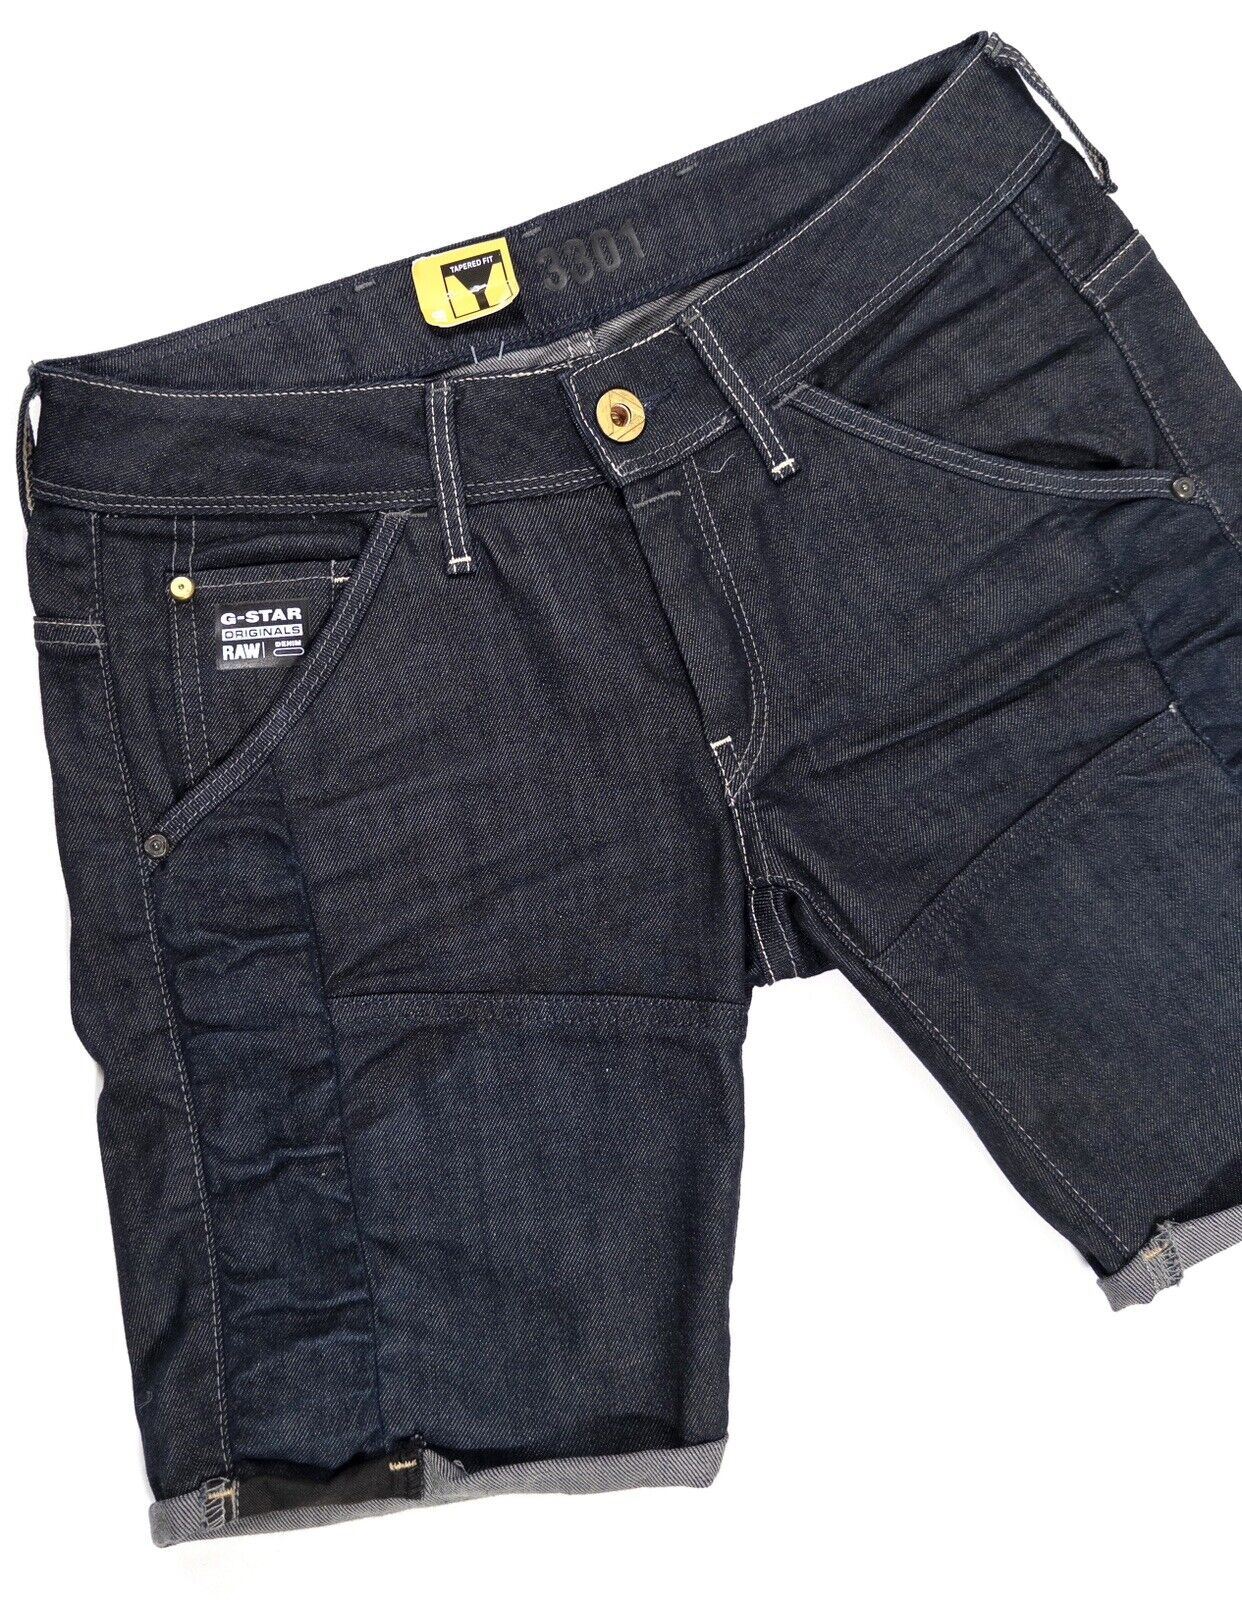 G-STAR RAW Originals Dark Blue Men's Denim Shorts Size UK W28 L34